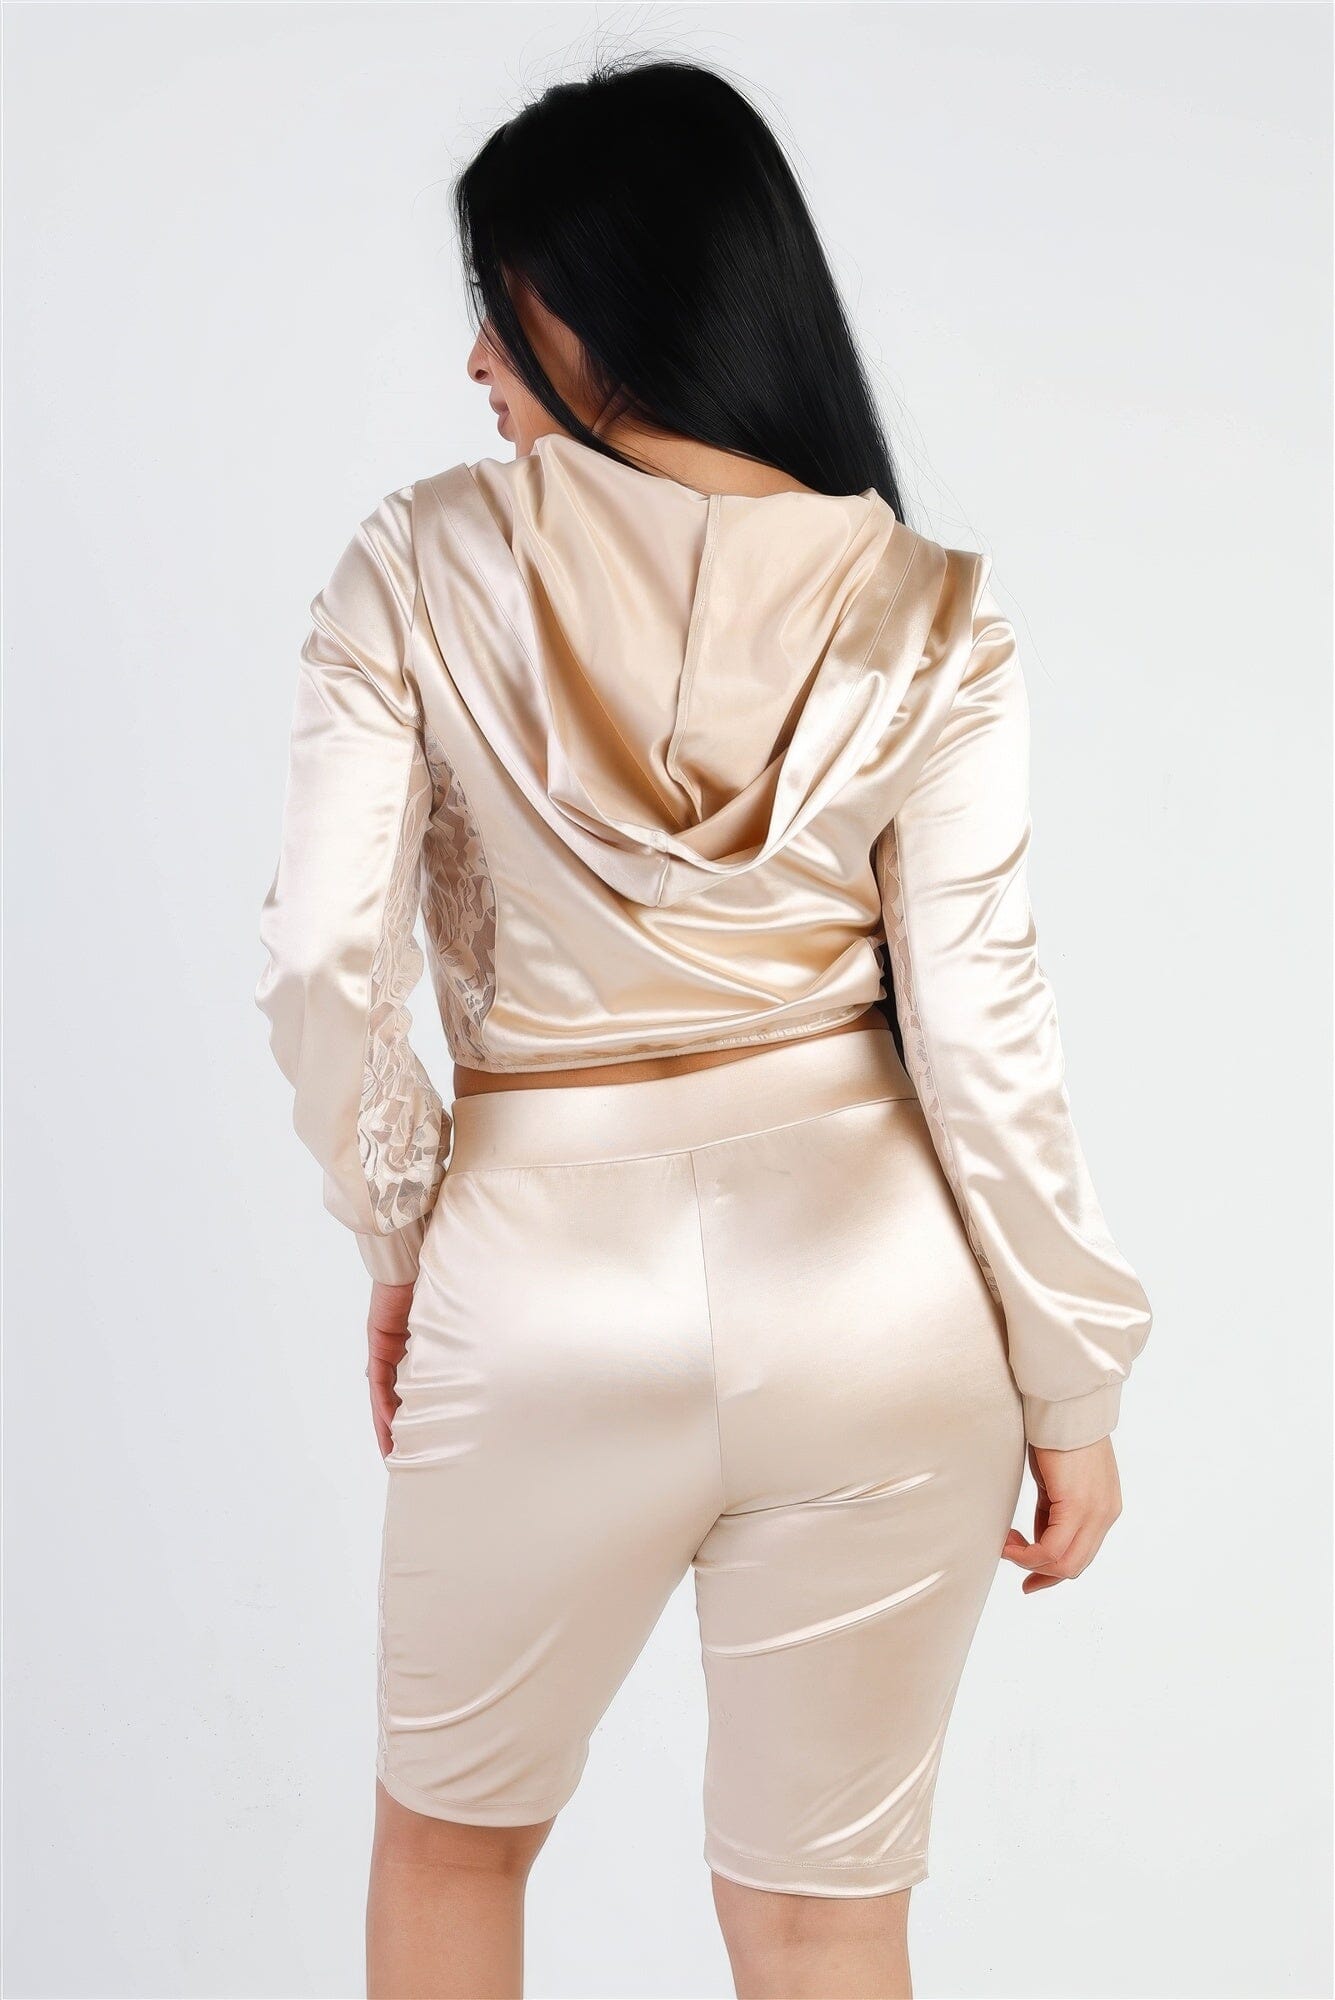 Champagne beige Satin Lace Details Long Sleeve Hooded Crop Top & Biker Short Set Outfit Sets jehouze 